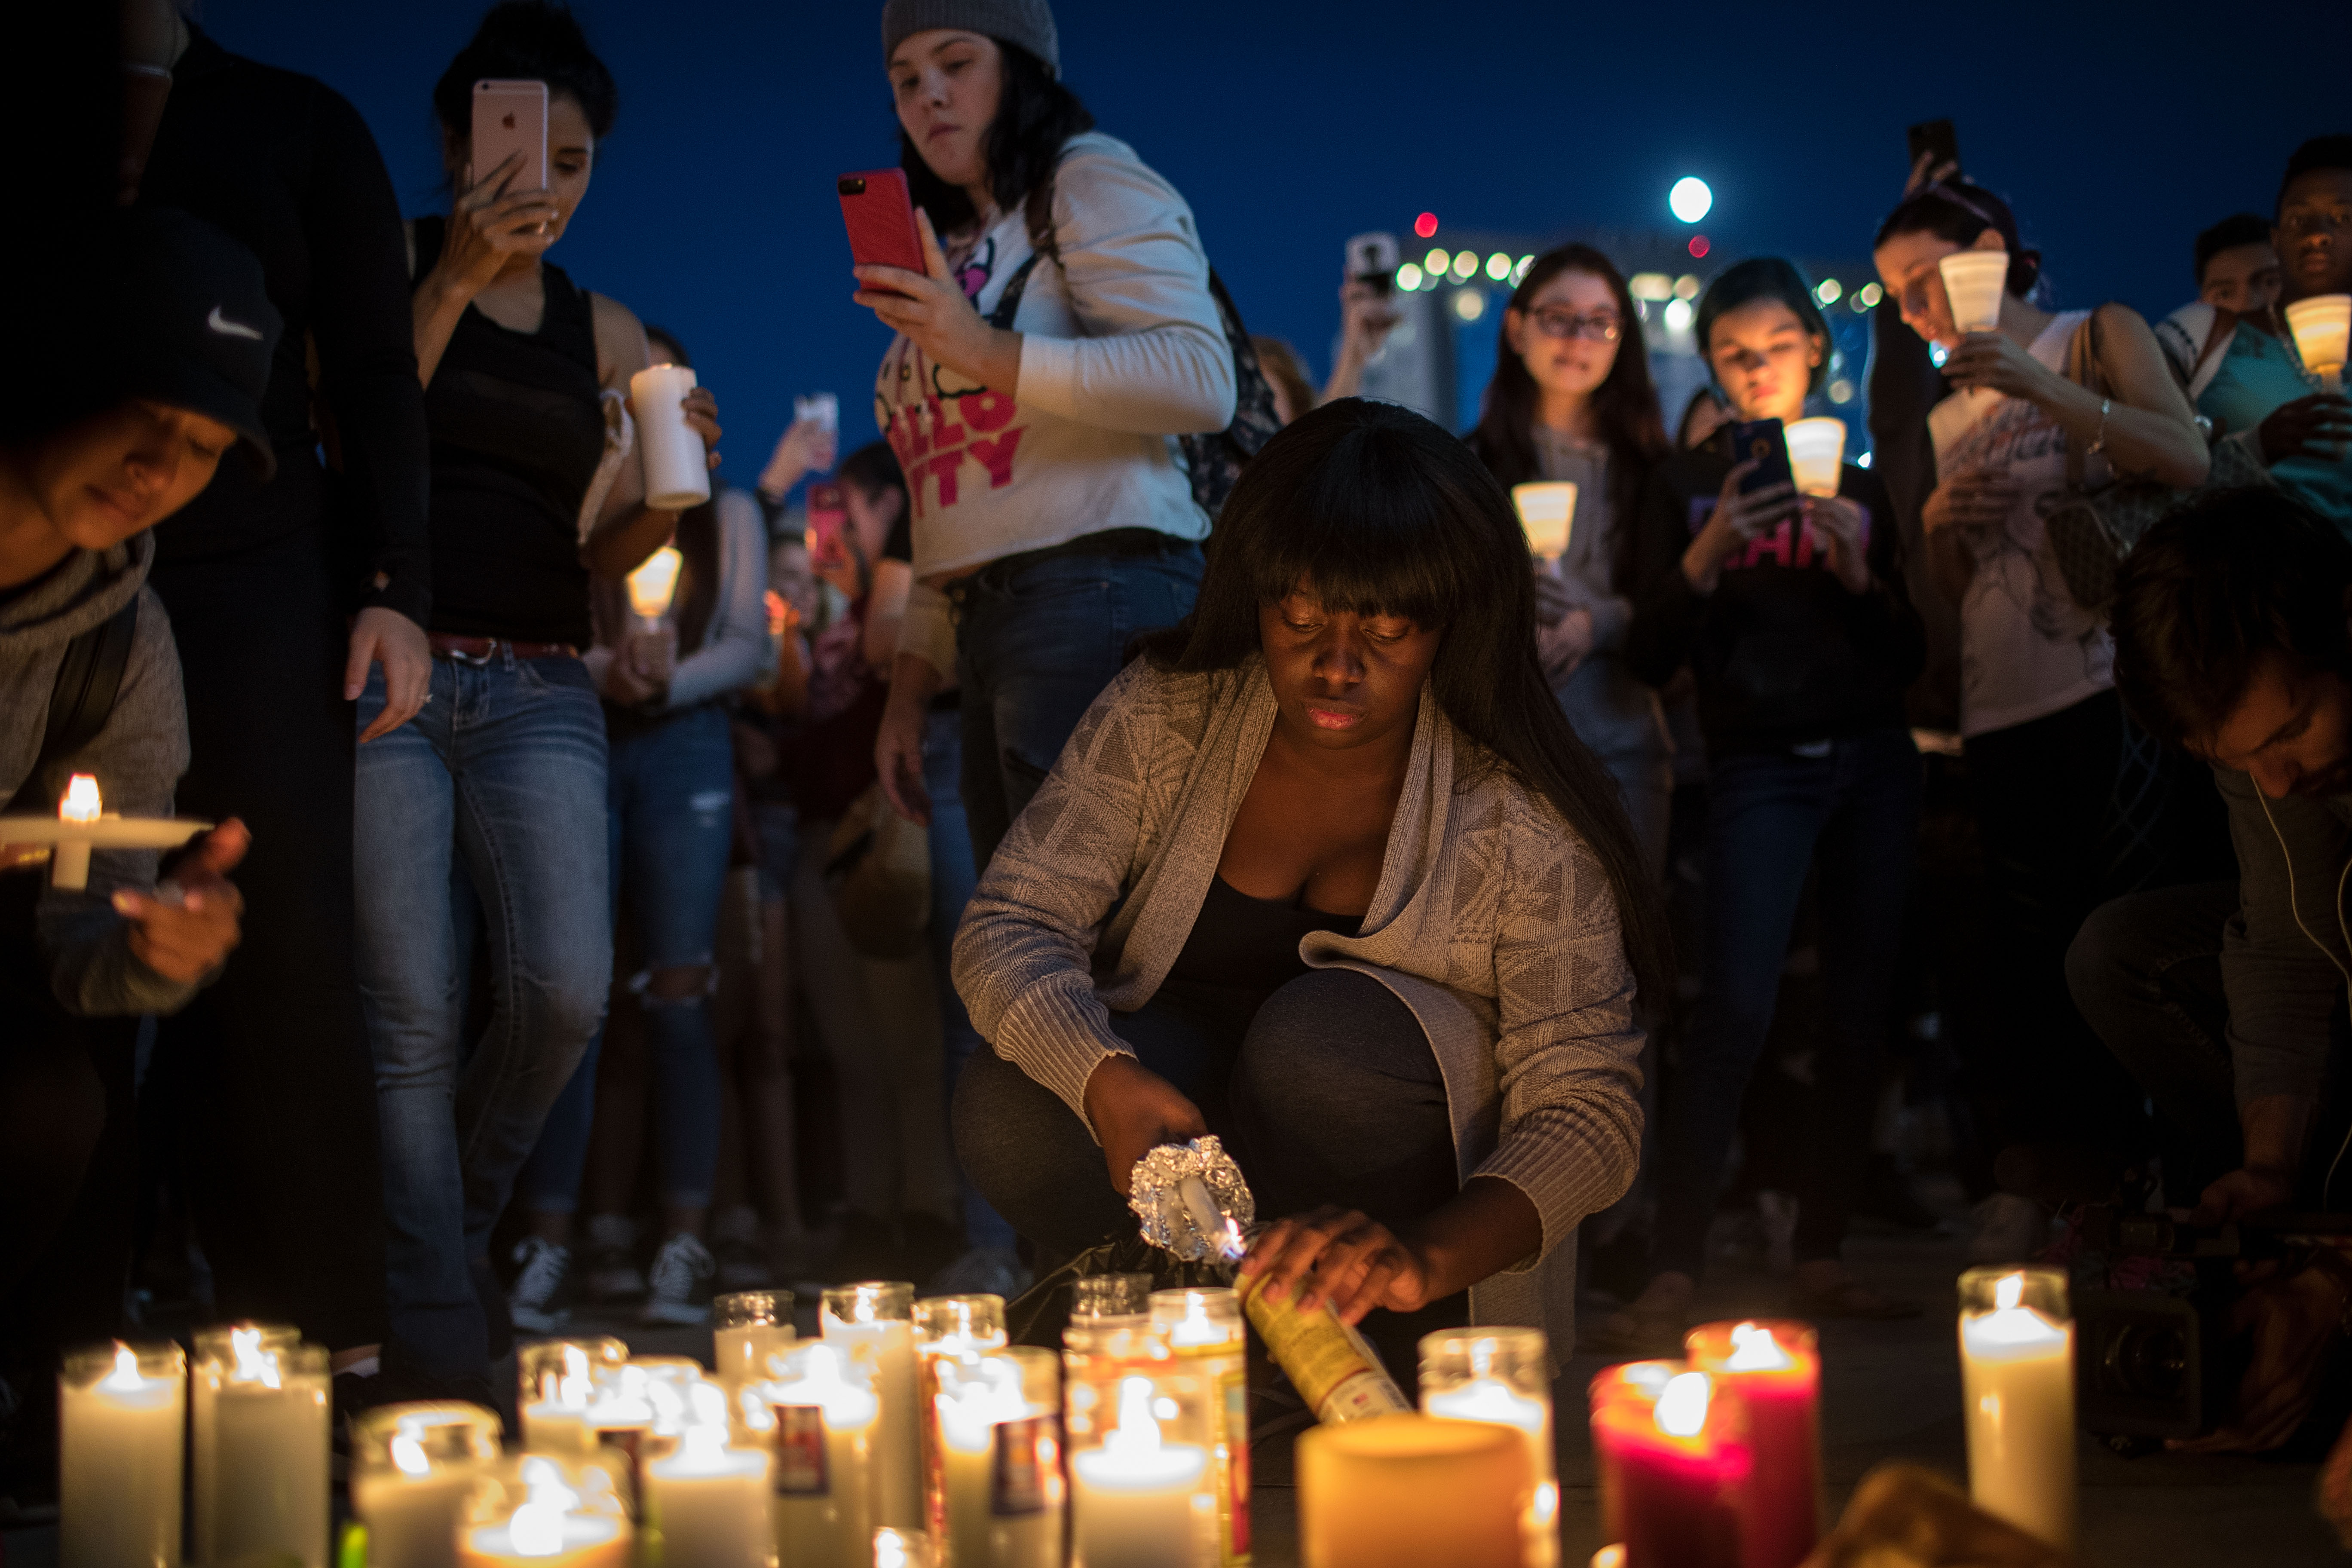 Mass Shooting At Mandalay Bay In Las Vegas Leaves At Least 50 Dead Cnn